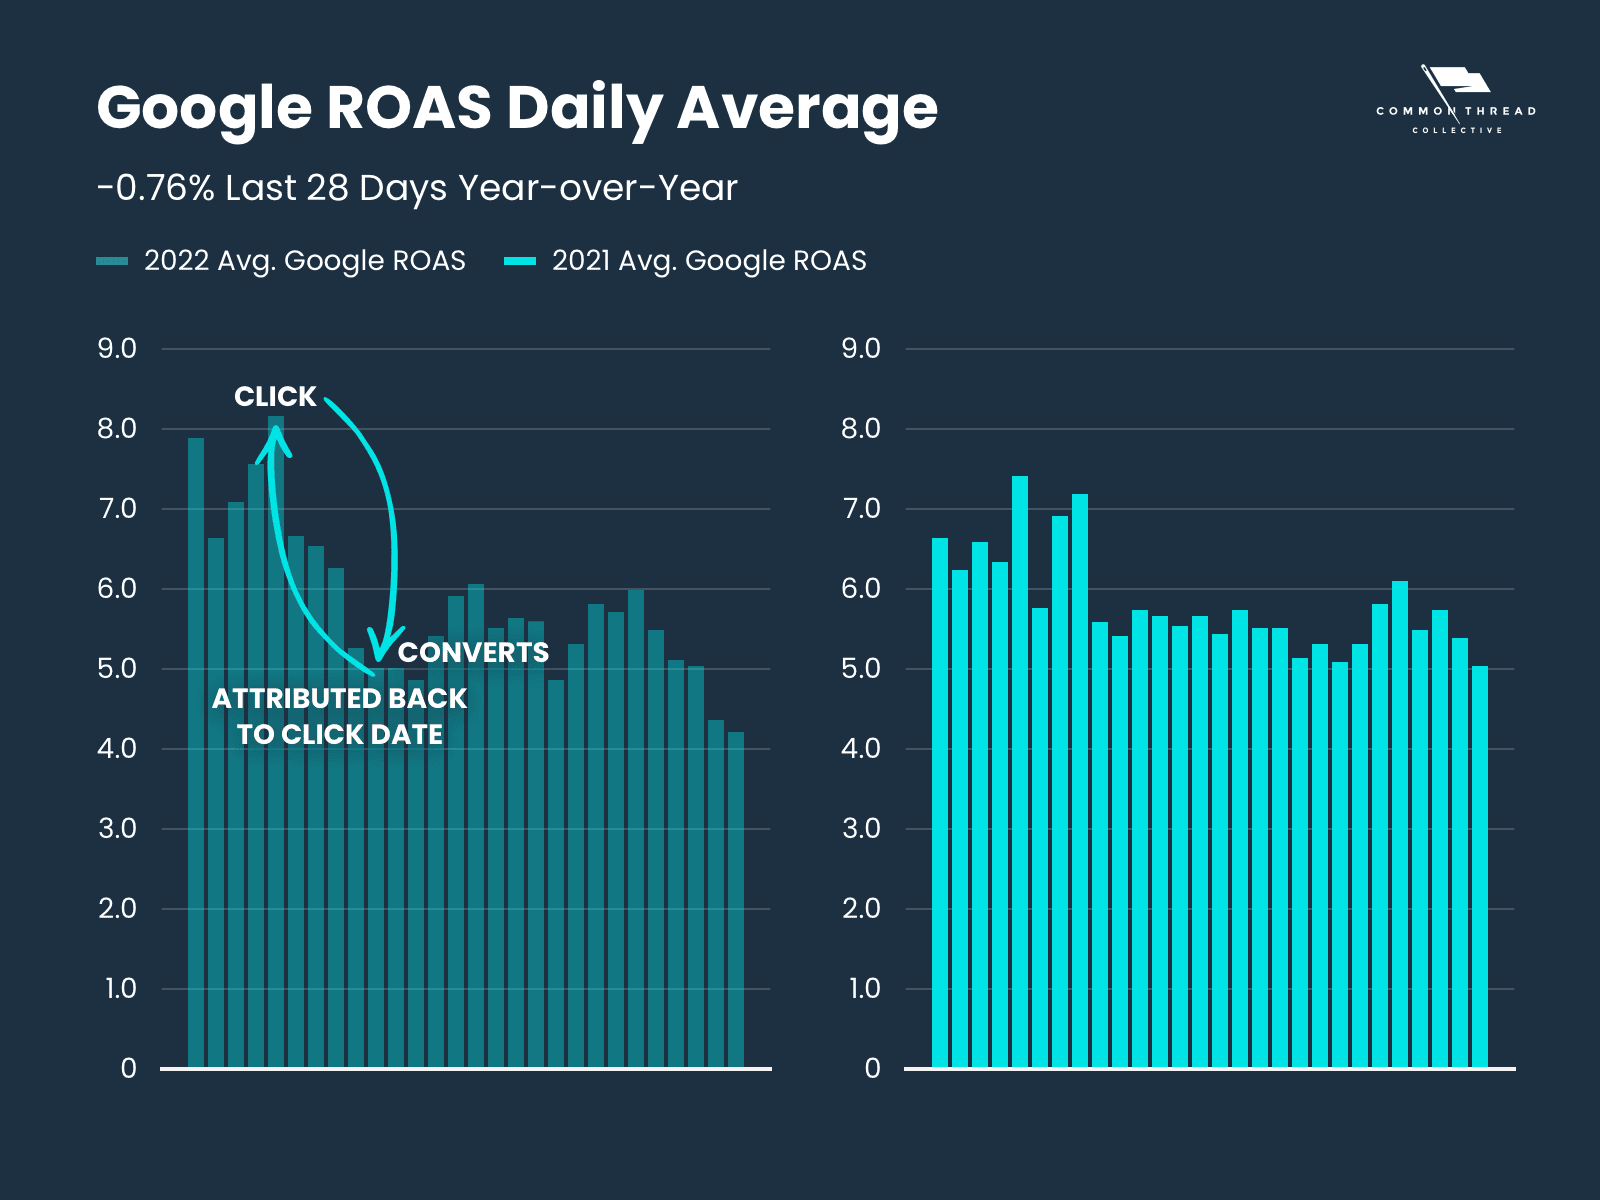 Google ROAS daily average lagging problem